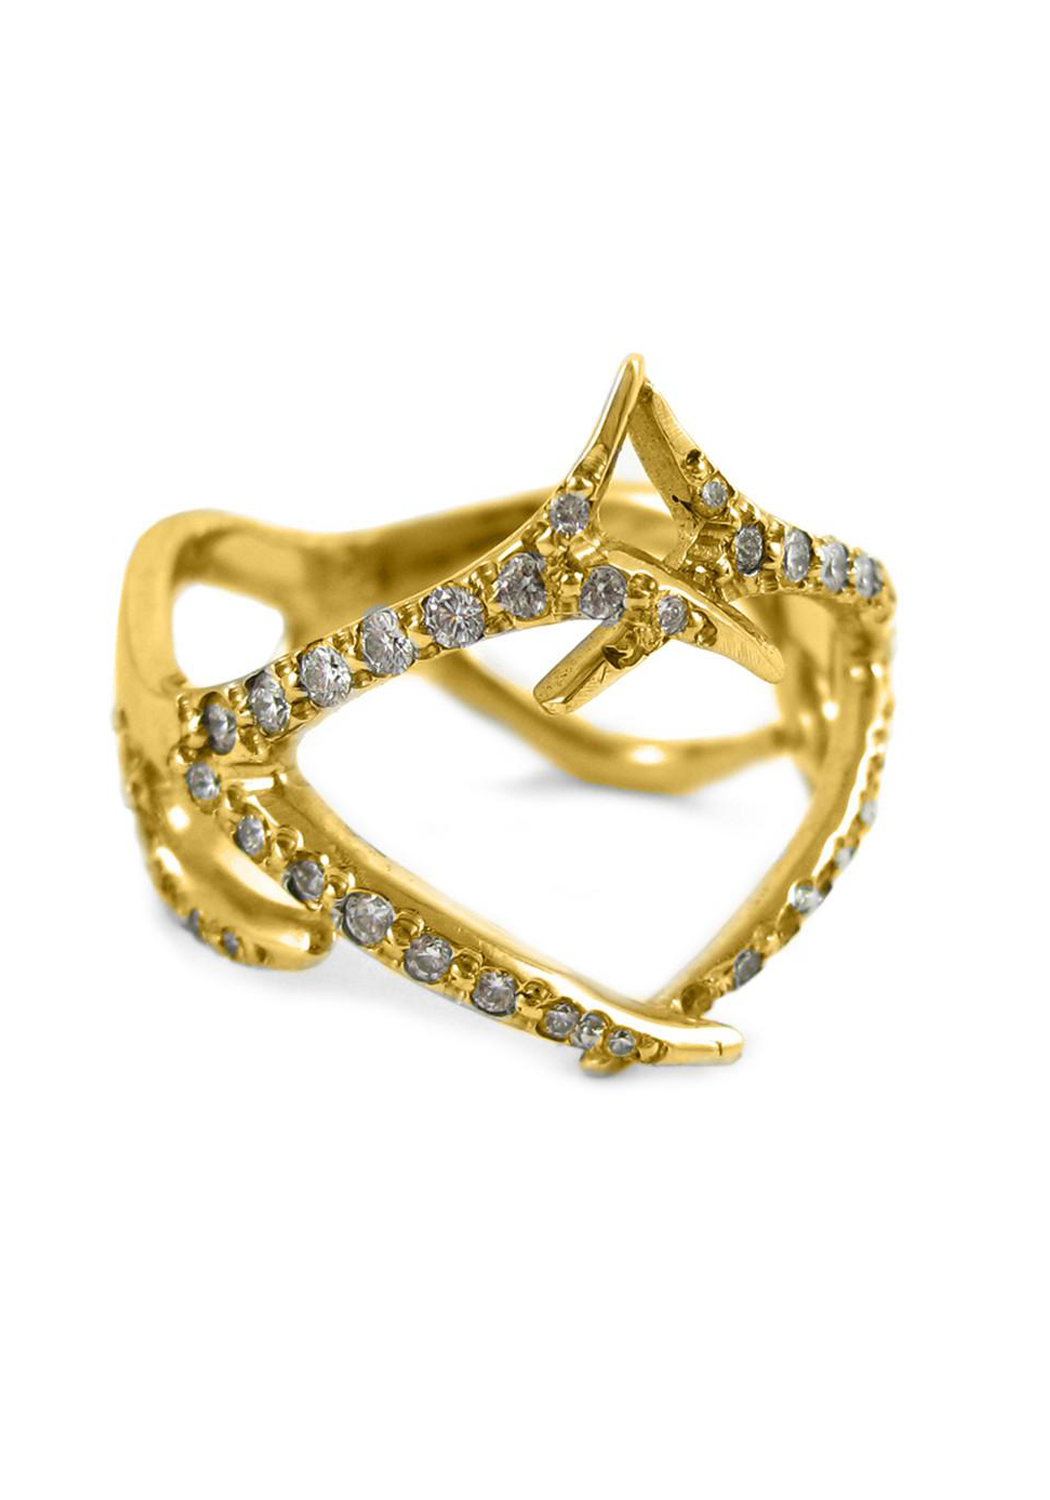 K. Brunini 18K Yellow Gold Diamond Double Antler Ring | OsterJewelers.com